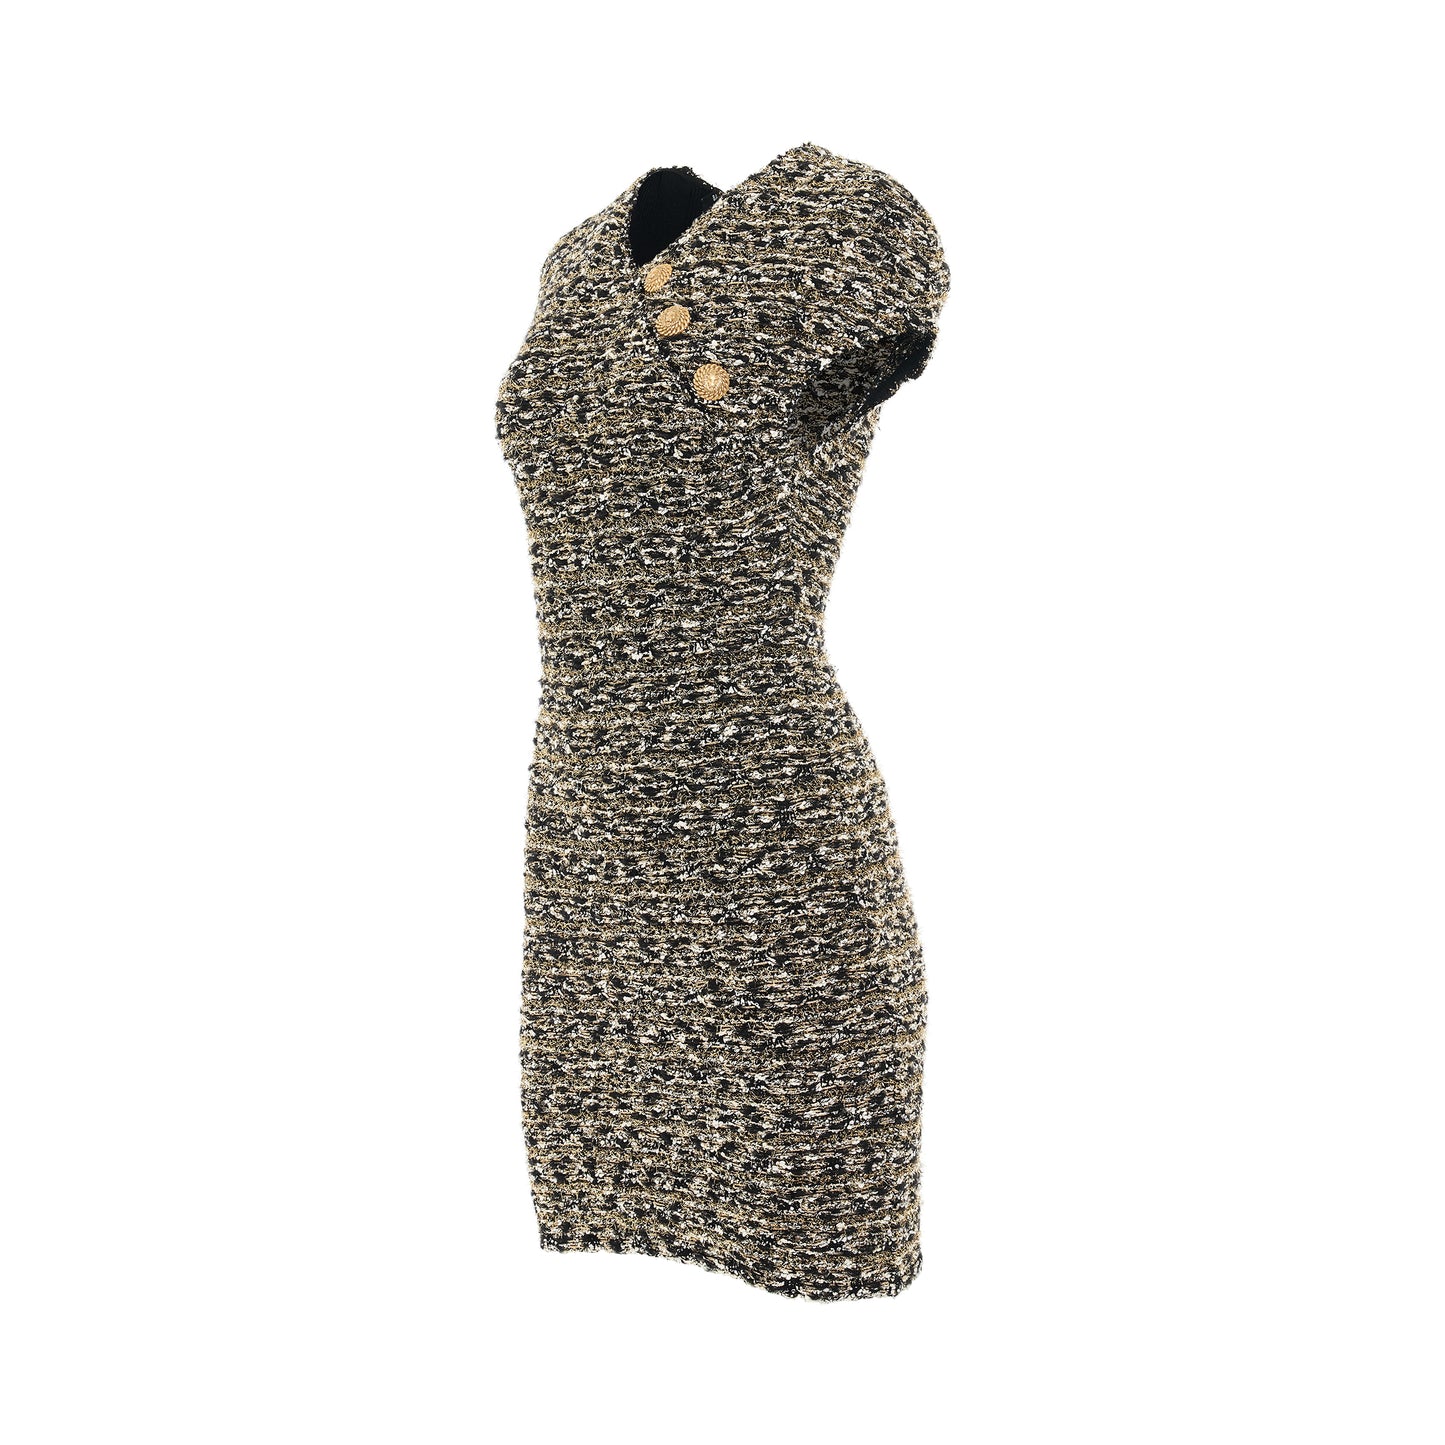 Sleeveless Tweed Short Dress in Black/Gold